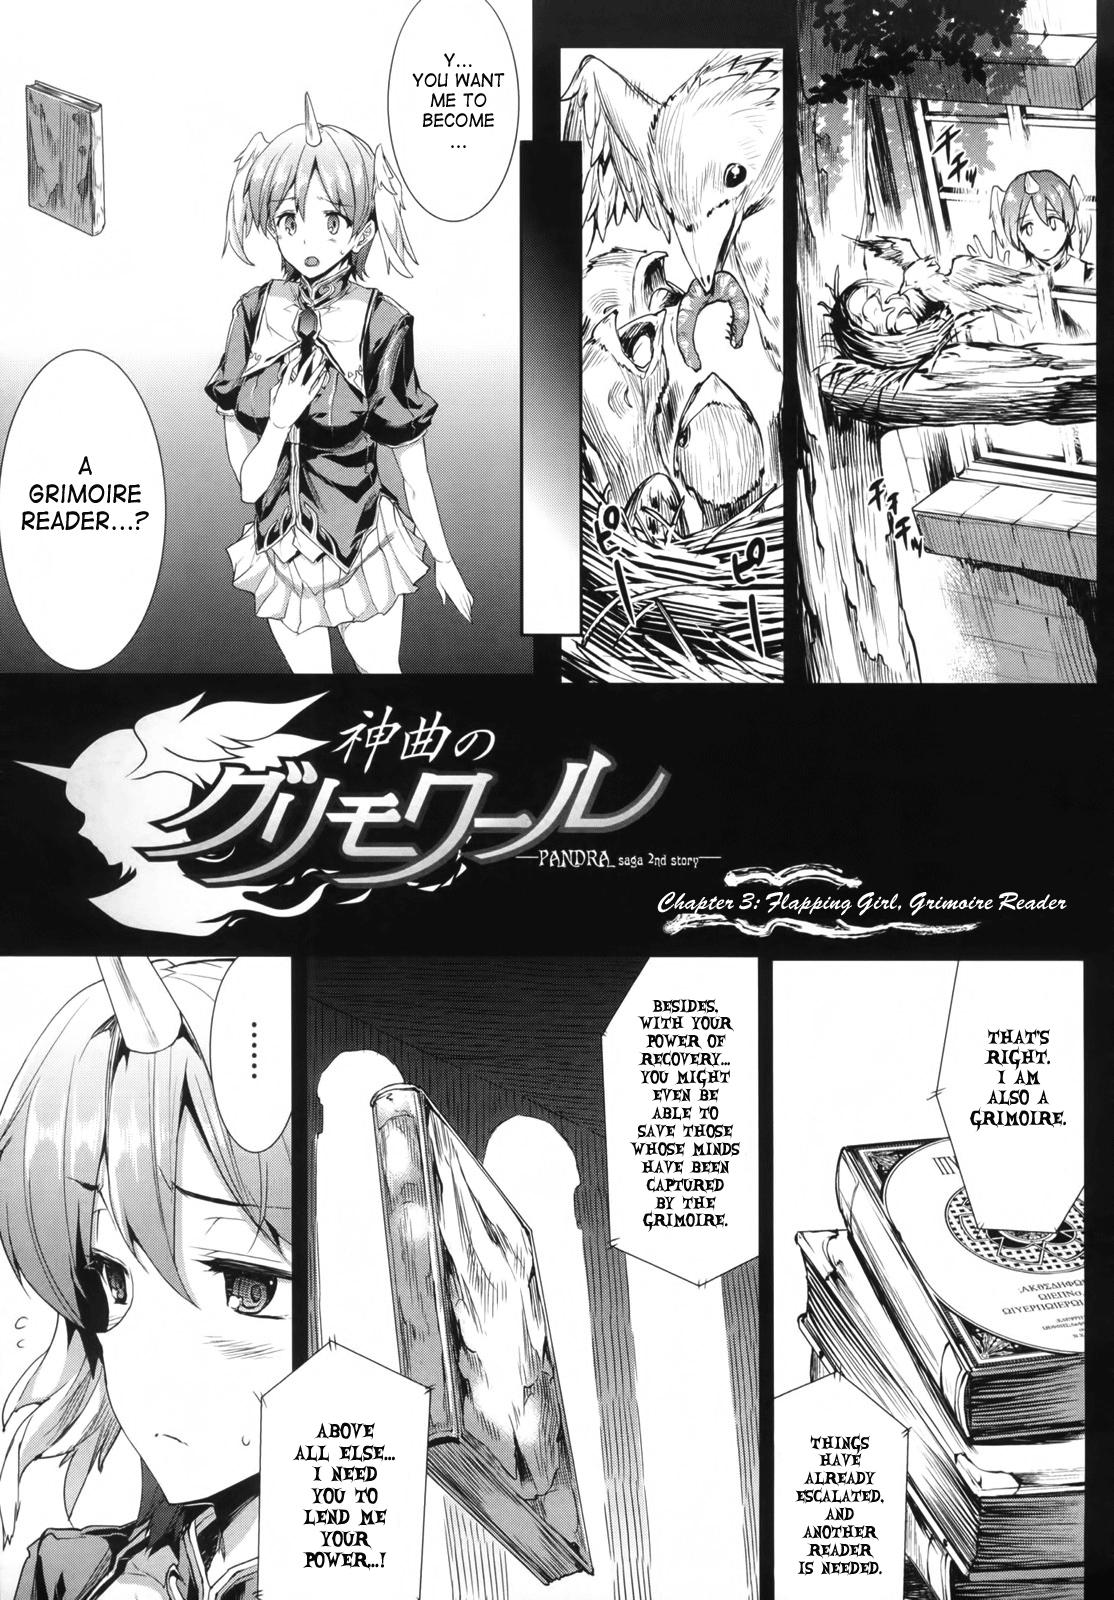 [ERECT TOUCH (Erect Sawaru)] Shinkyoku no Grimoire -PANDRA saga 2nd story- Ch 01-12 + Side Story x 3 [English] [SaHa] 55